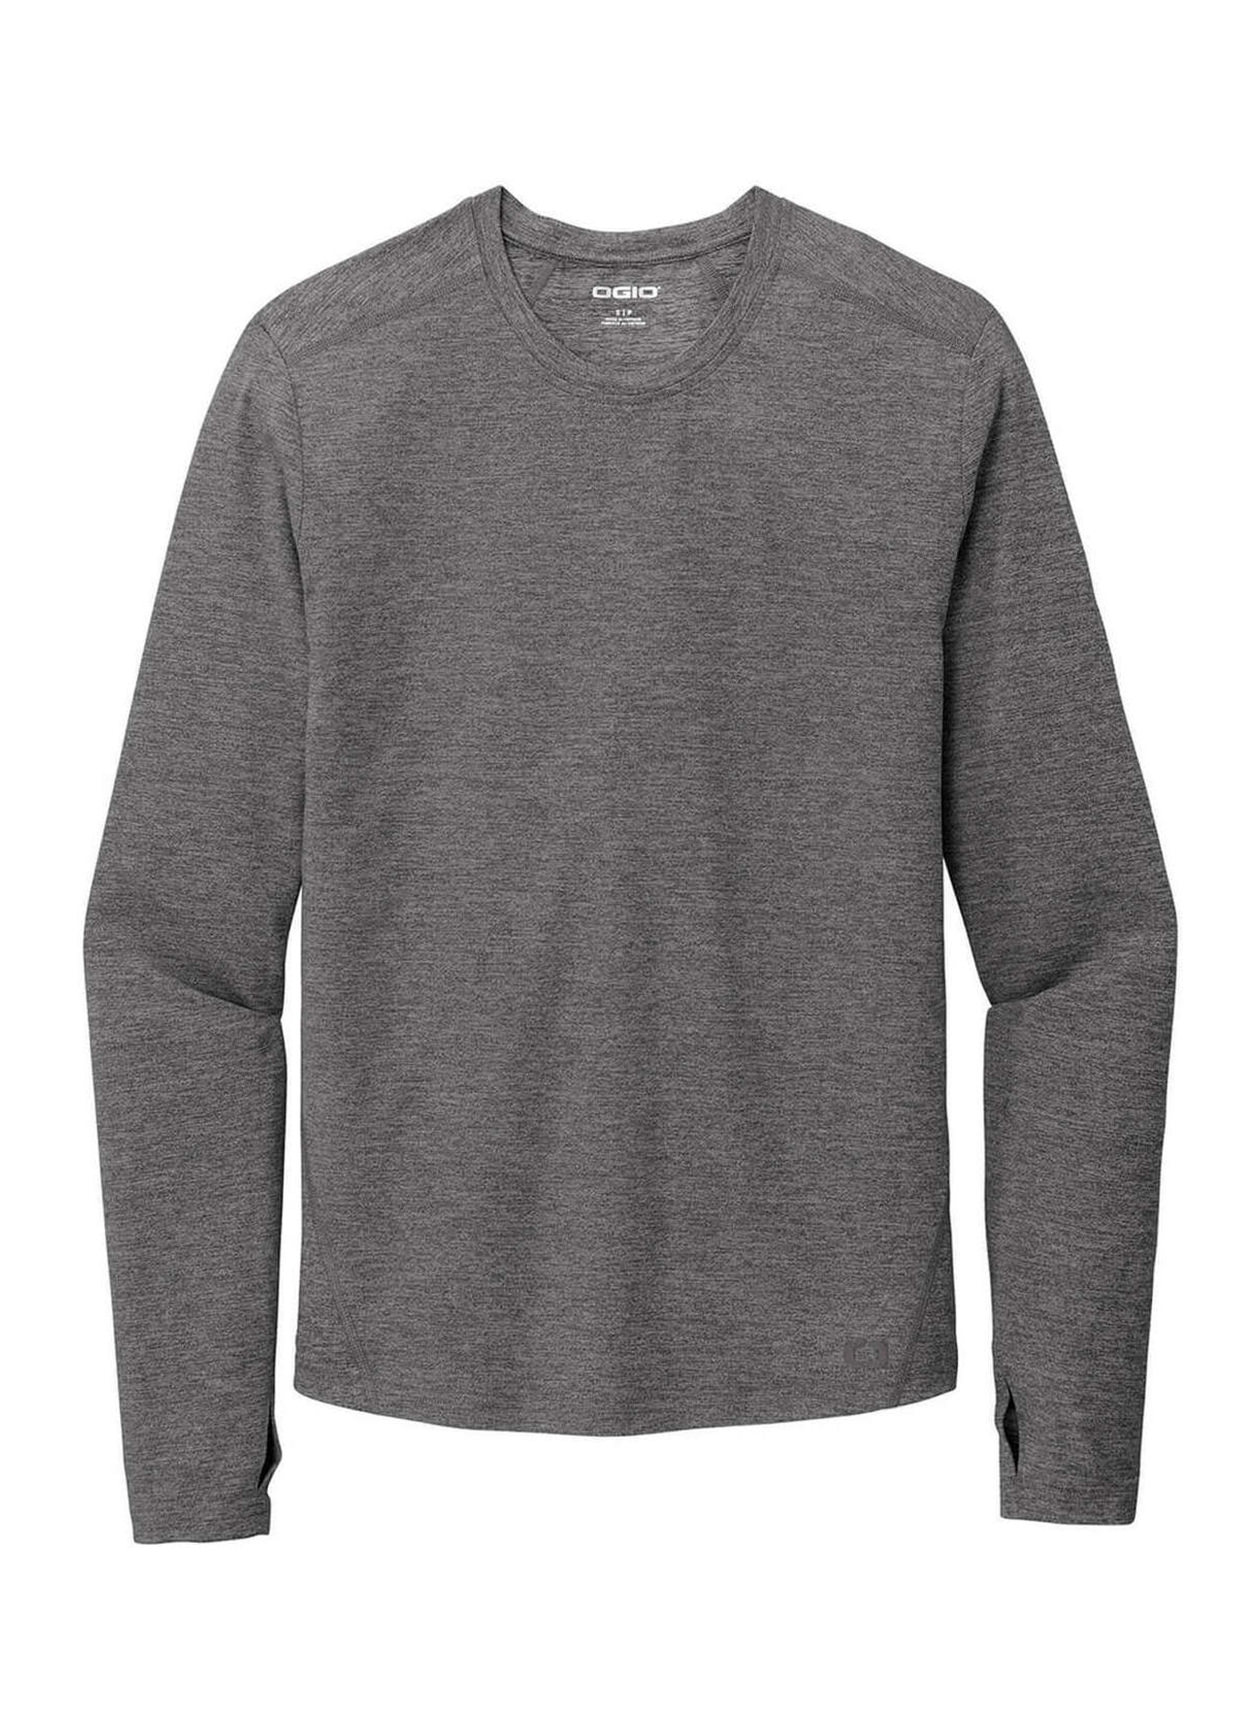 OGIO Men's Gear Grey Heather Mesh Long-Sleeve T-Shirt